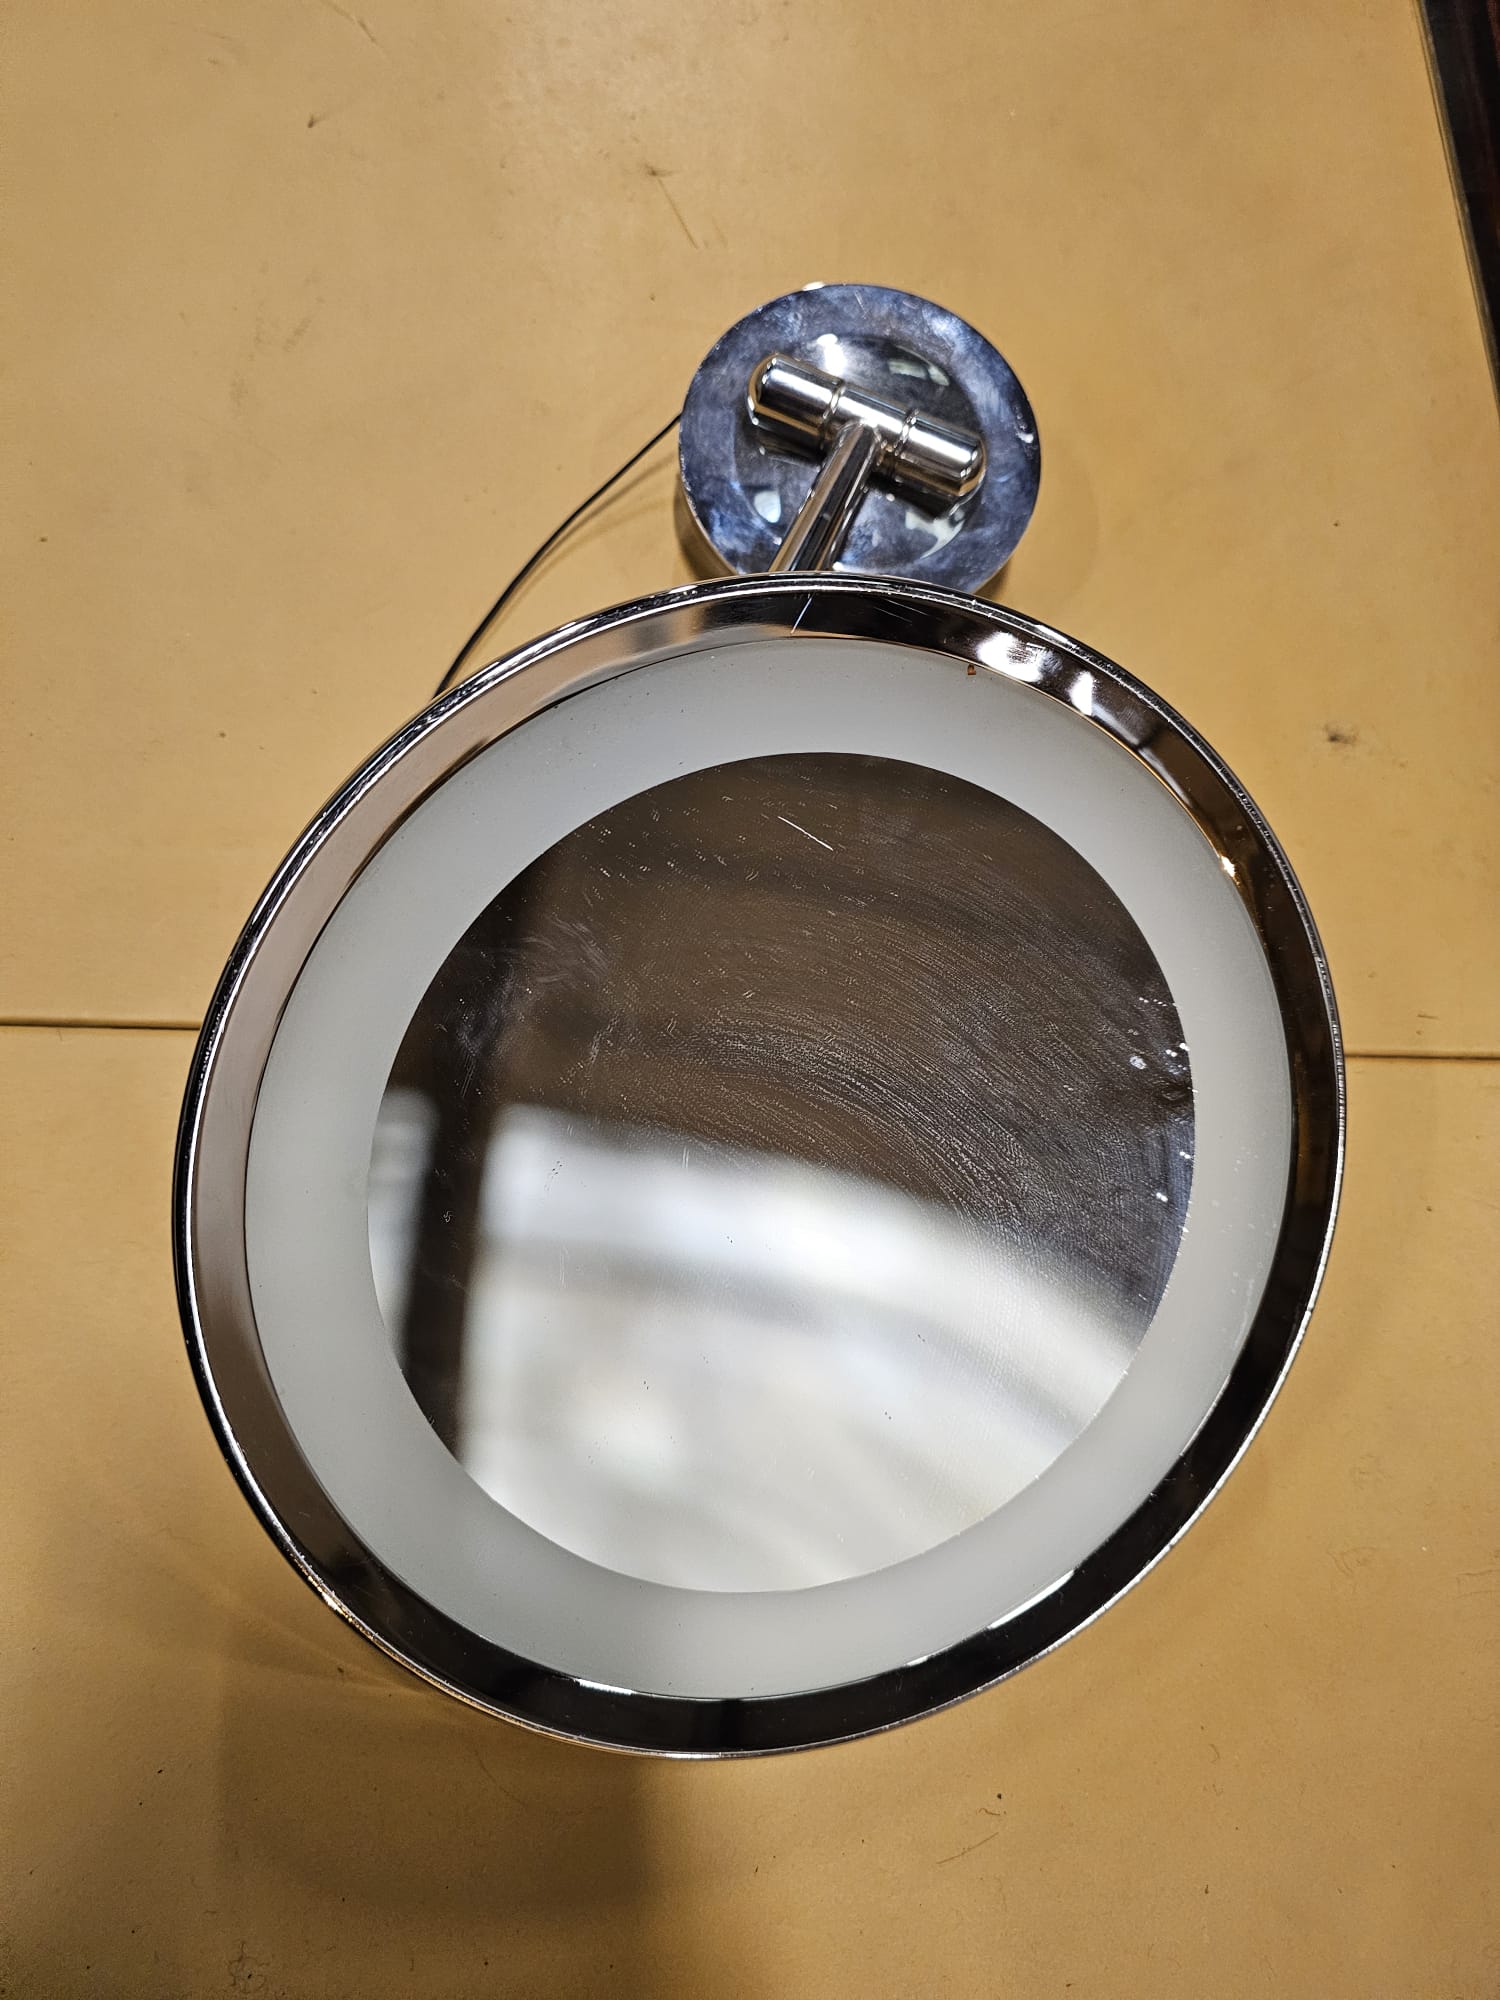 LED Illuminated Magnifying Vanity Mirror For Bathroom Round Ingress Protection Rating IP49 - Image 2 of 3